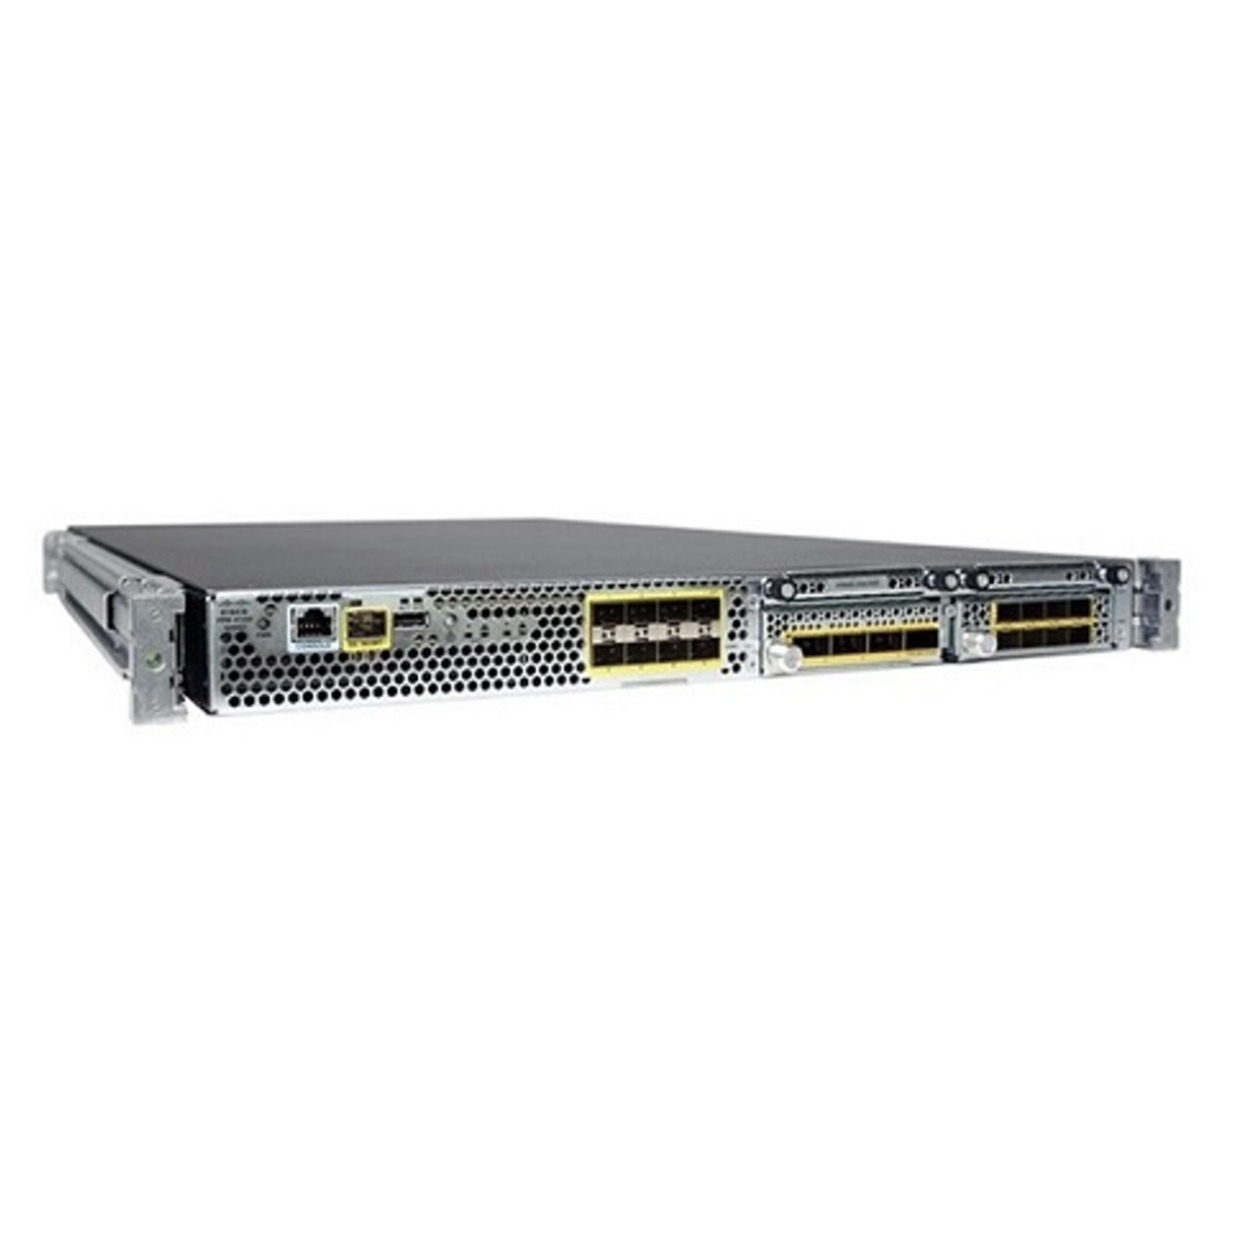 Cisco Firepower 4115 NGIPS Appliance, 1RU, 2 x Network Module Bays